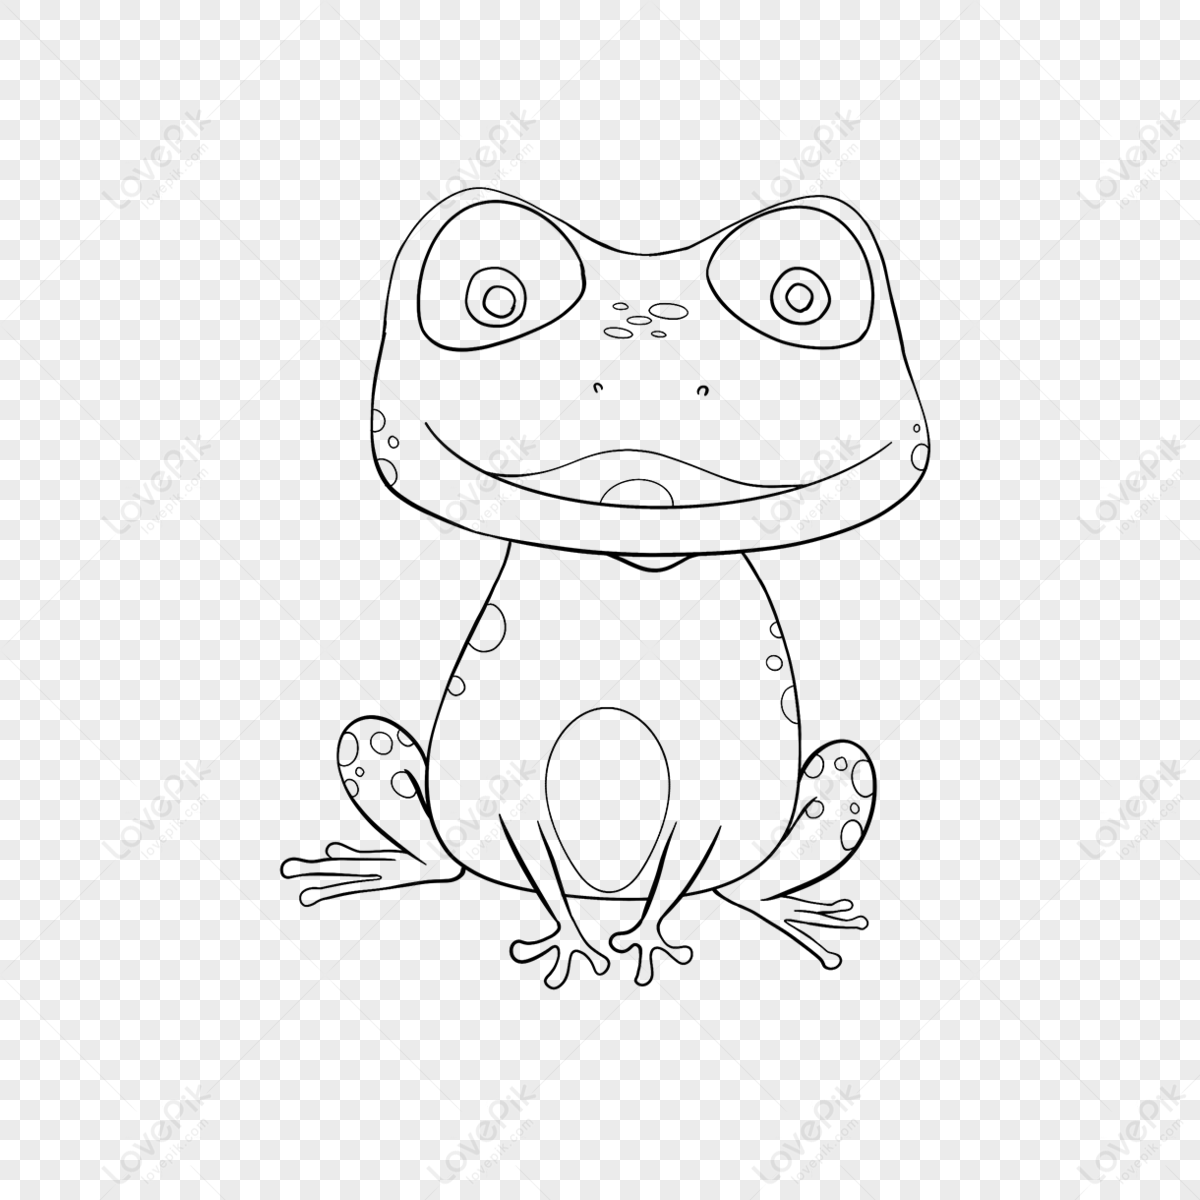 Little Frog Cartoon Image, Small Frog, Cartoon Frog, Frog Anime